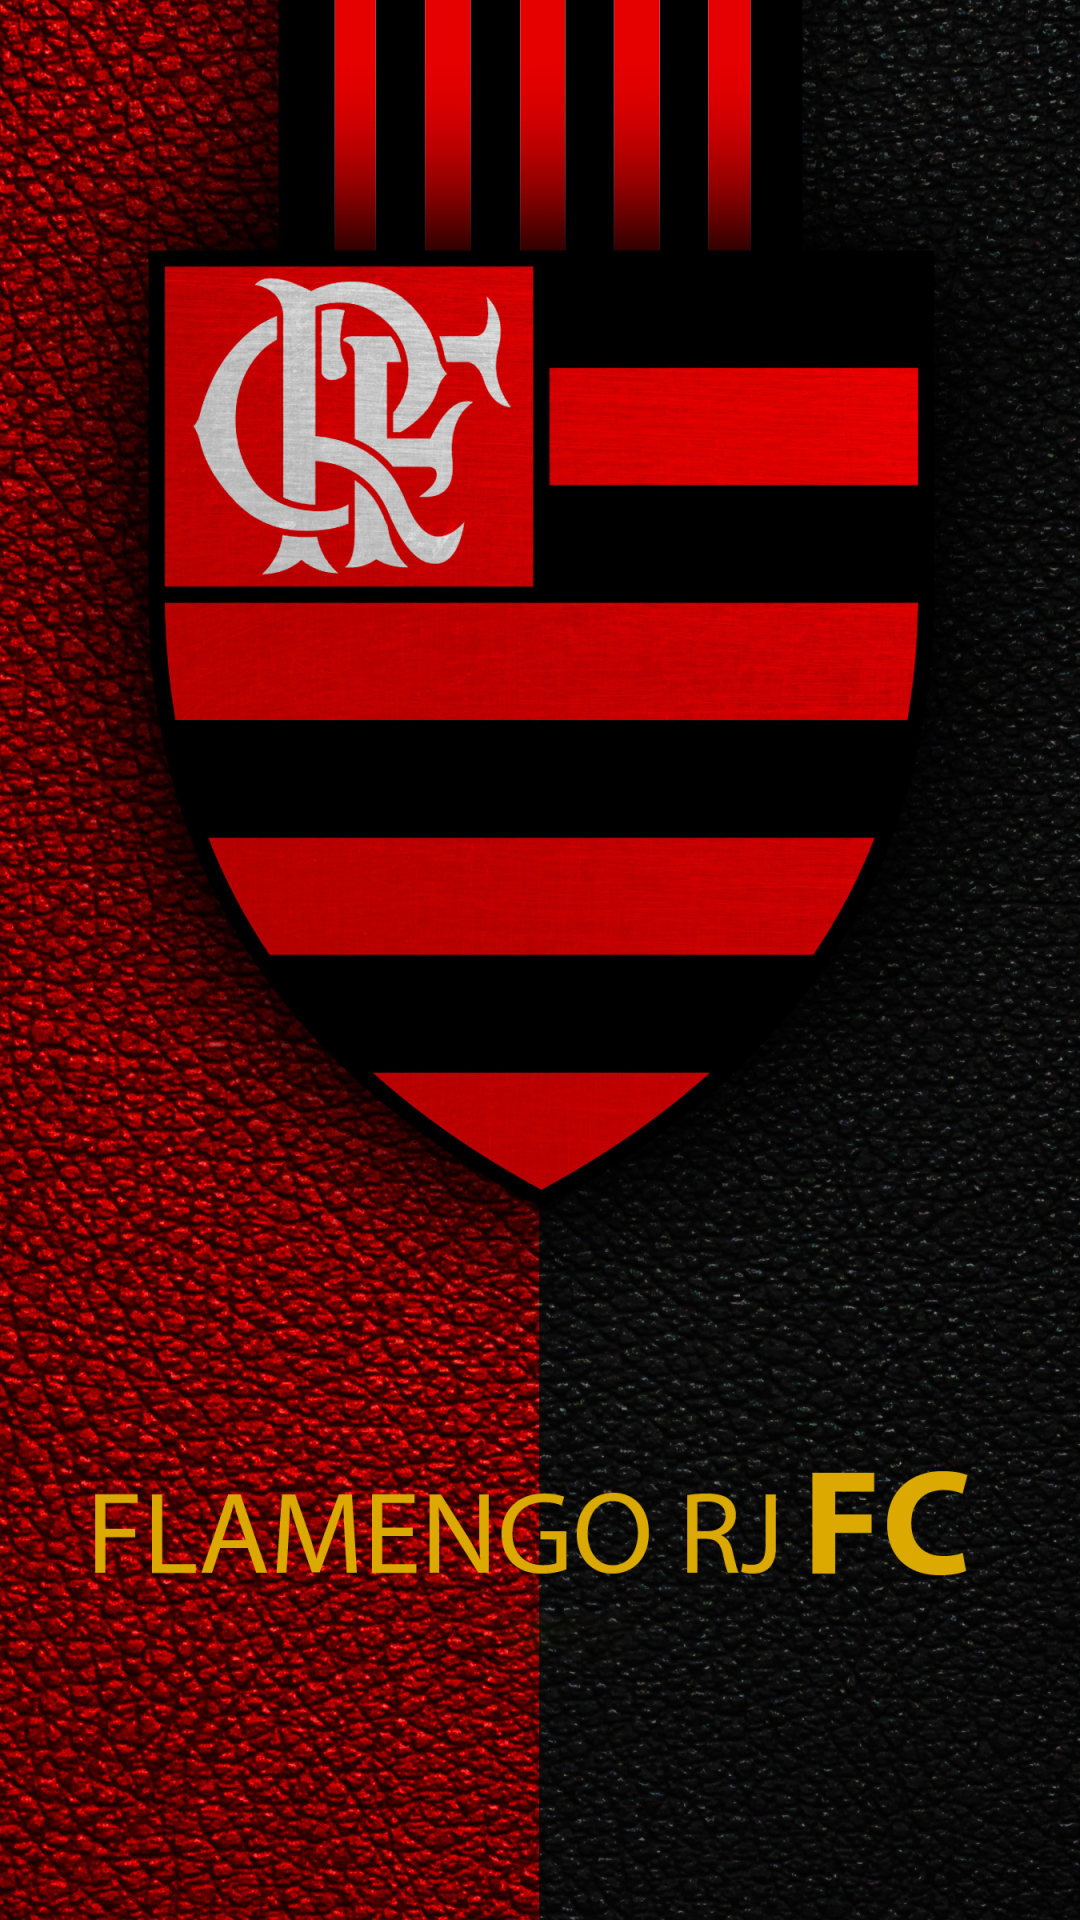 sports, clube de regatas do flamengo, soccer, logo wallpaper for mobile